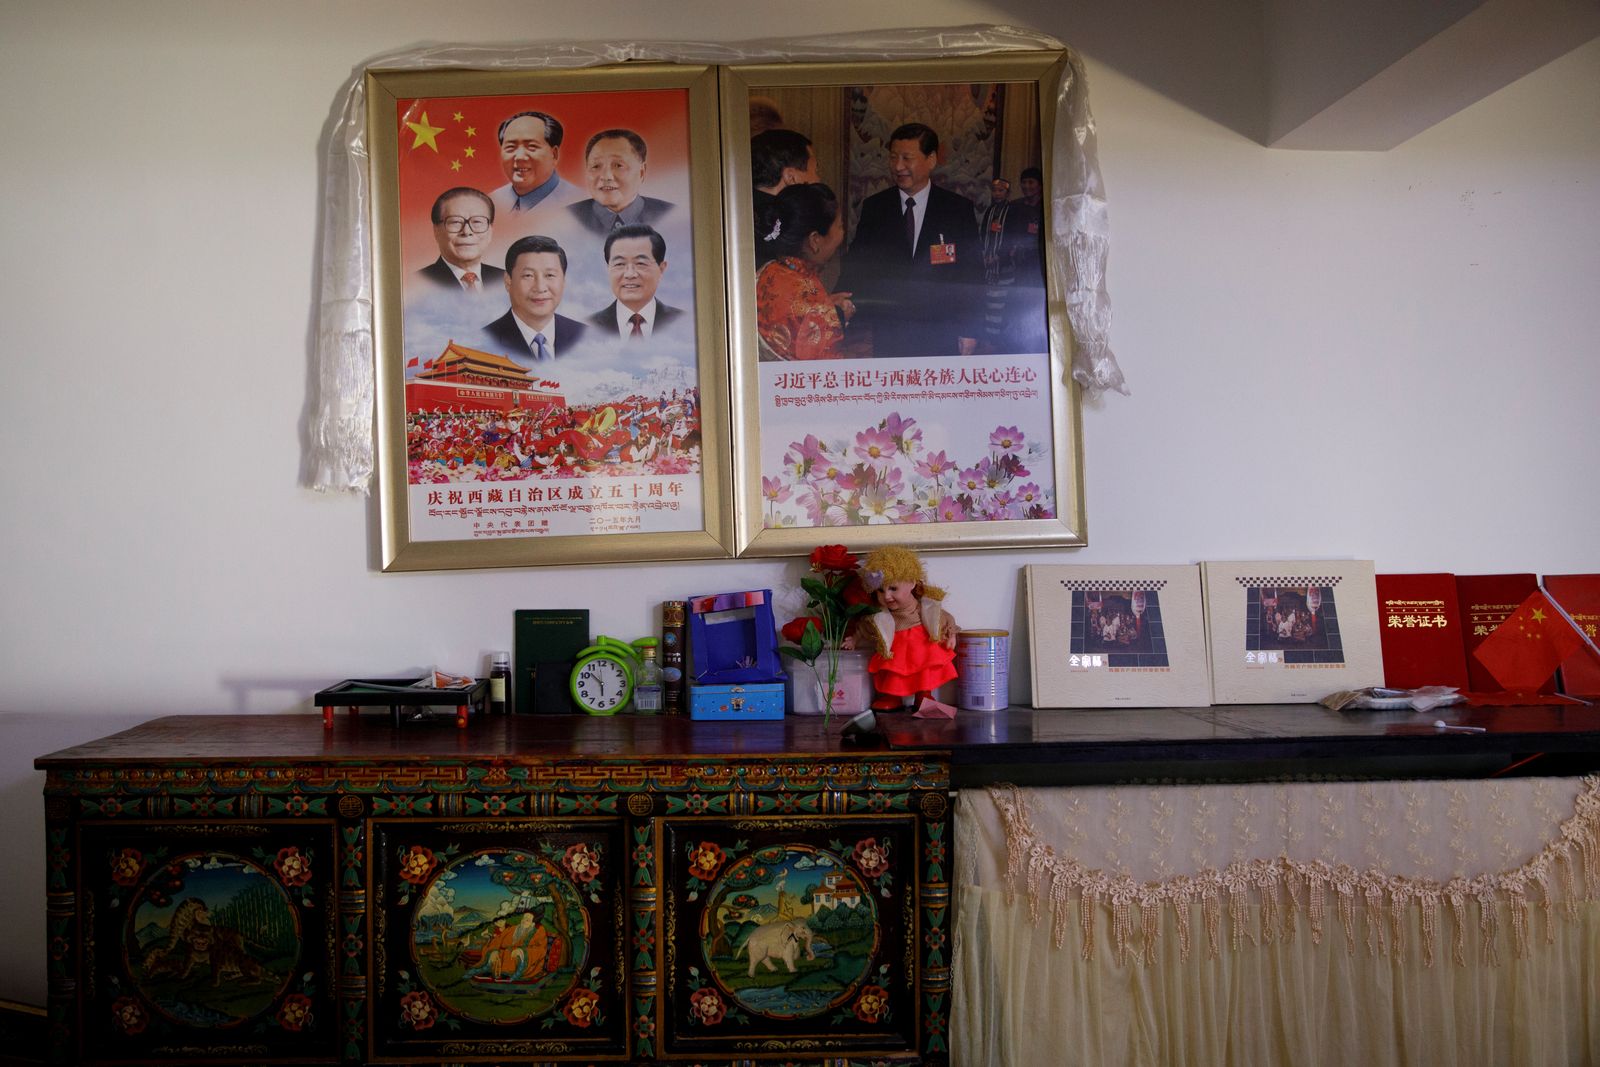 صور للرئيس شي جينبينغ وزعماء صينيين سابقين في منزل بالتيبت - 14 أكتوبر 2020 - REUTERS